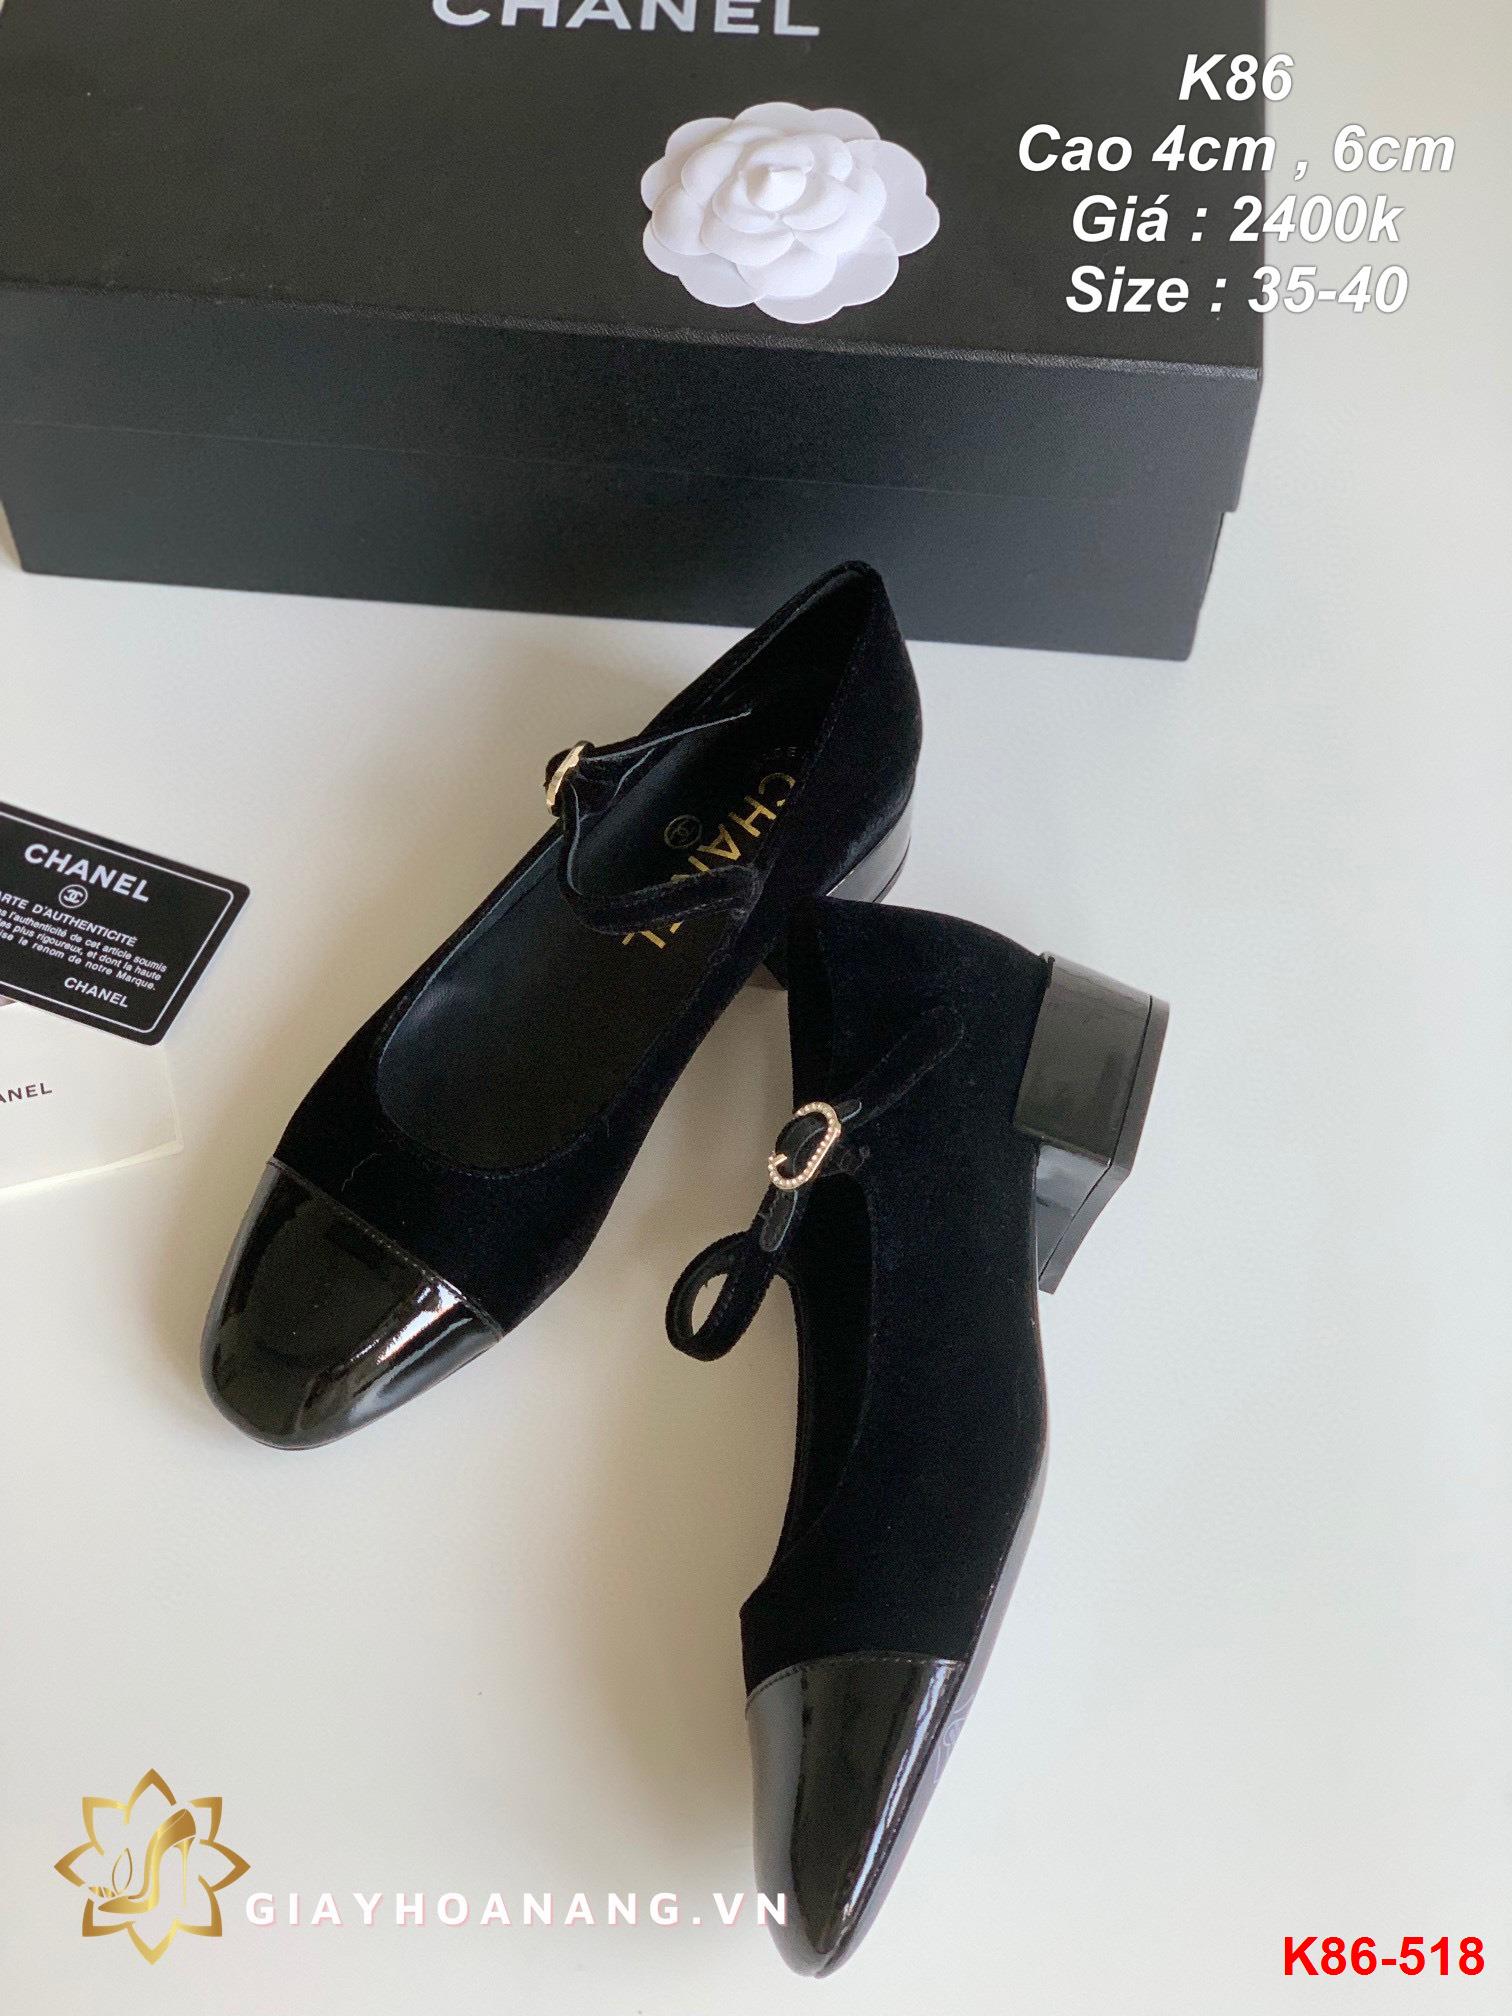 K86-518 Chanel giày cao 4cm , 6cm siêu cấp